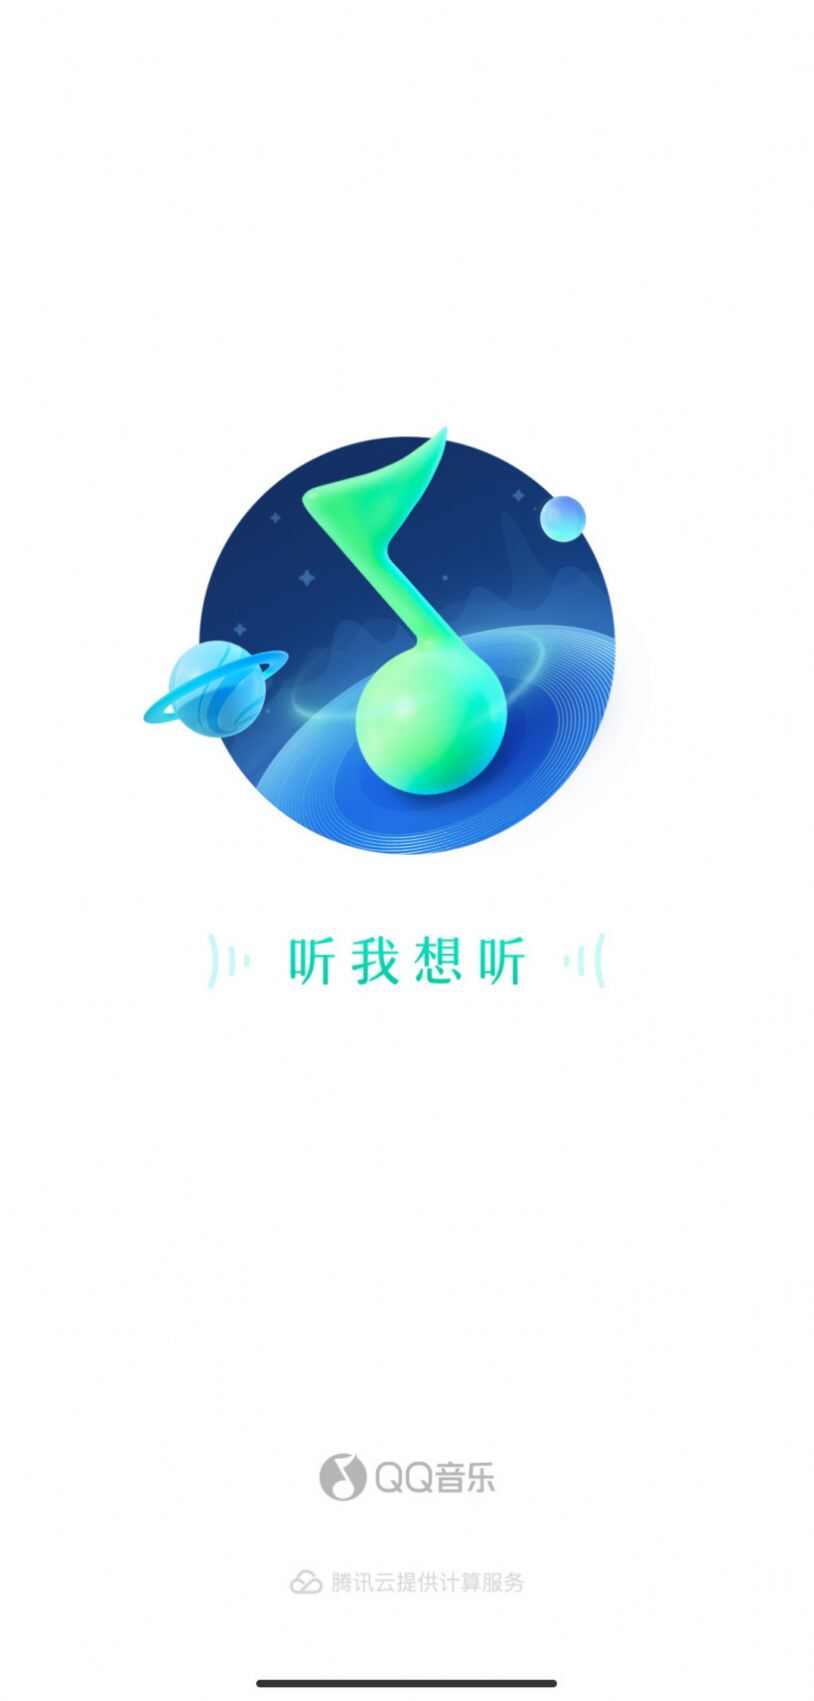 QQ音乐2018官方最新版app图片1